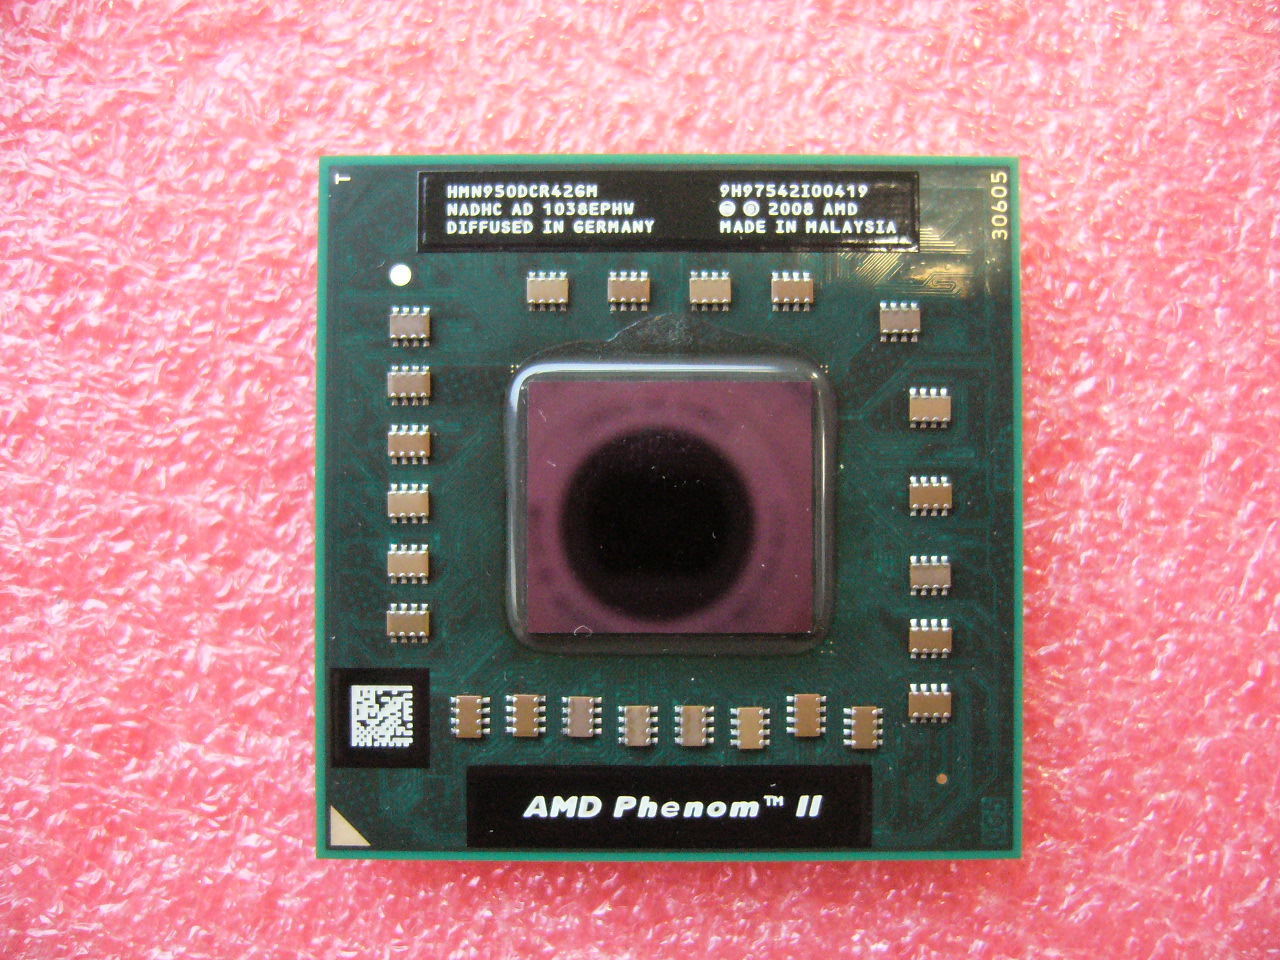 QTY 1x AMD Phenom II N950 2.1 GHz Quad-Core (HMN950DCR42GM) Laptop CPU Socket S1